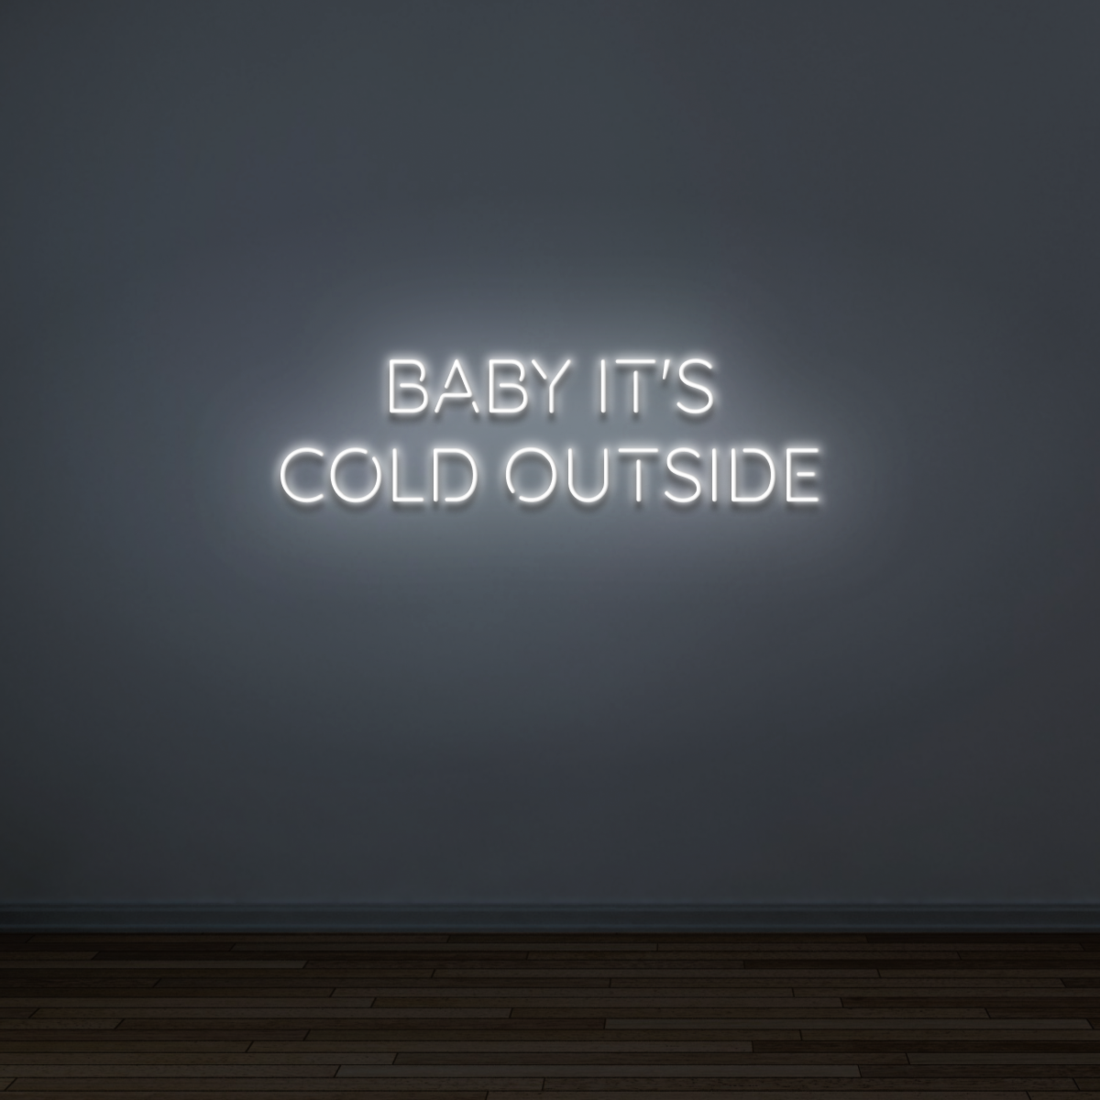 "BABY ITS COLD OUTSIDE" - NEONIDAS NEONSCHILD LED-SCHILD